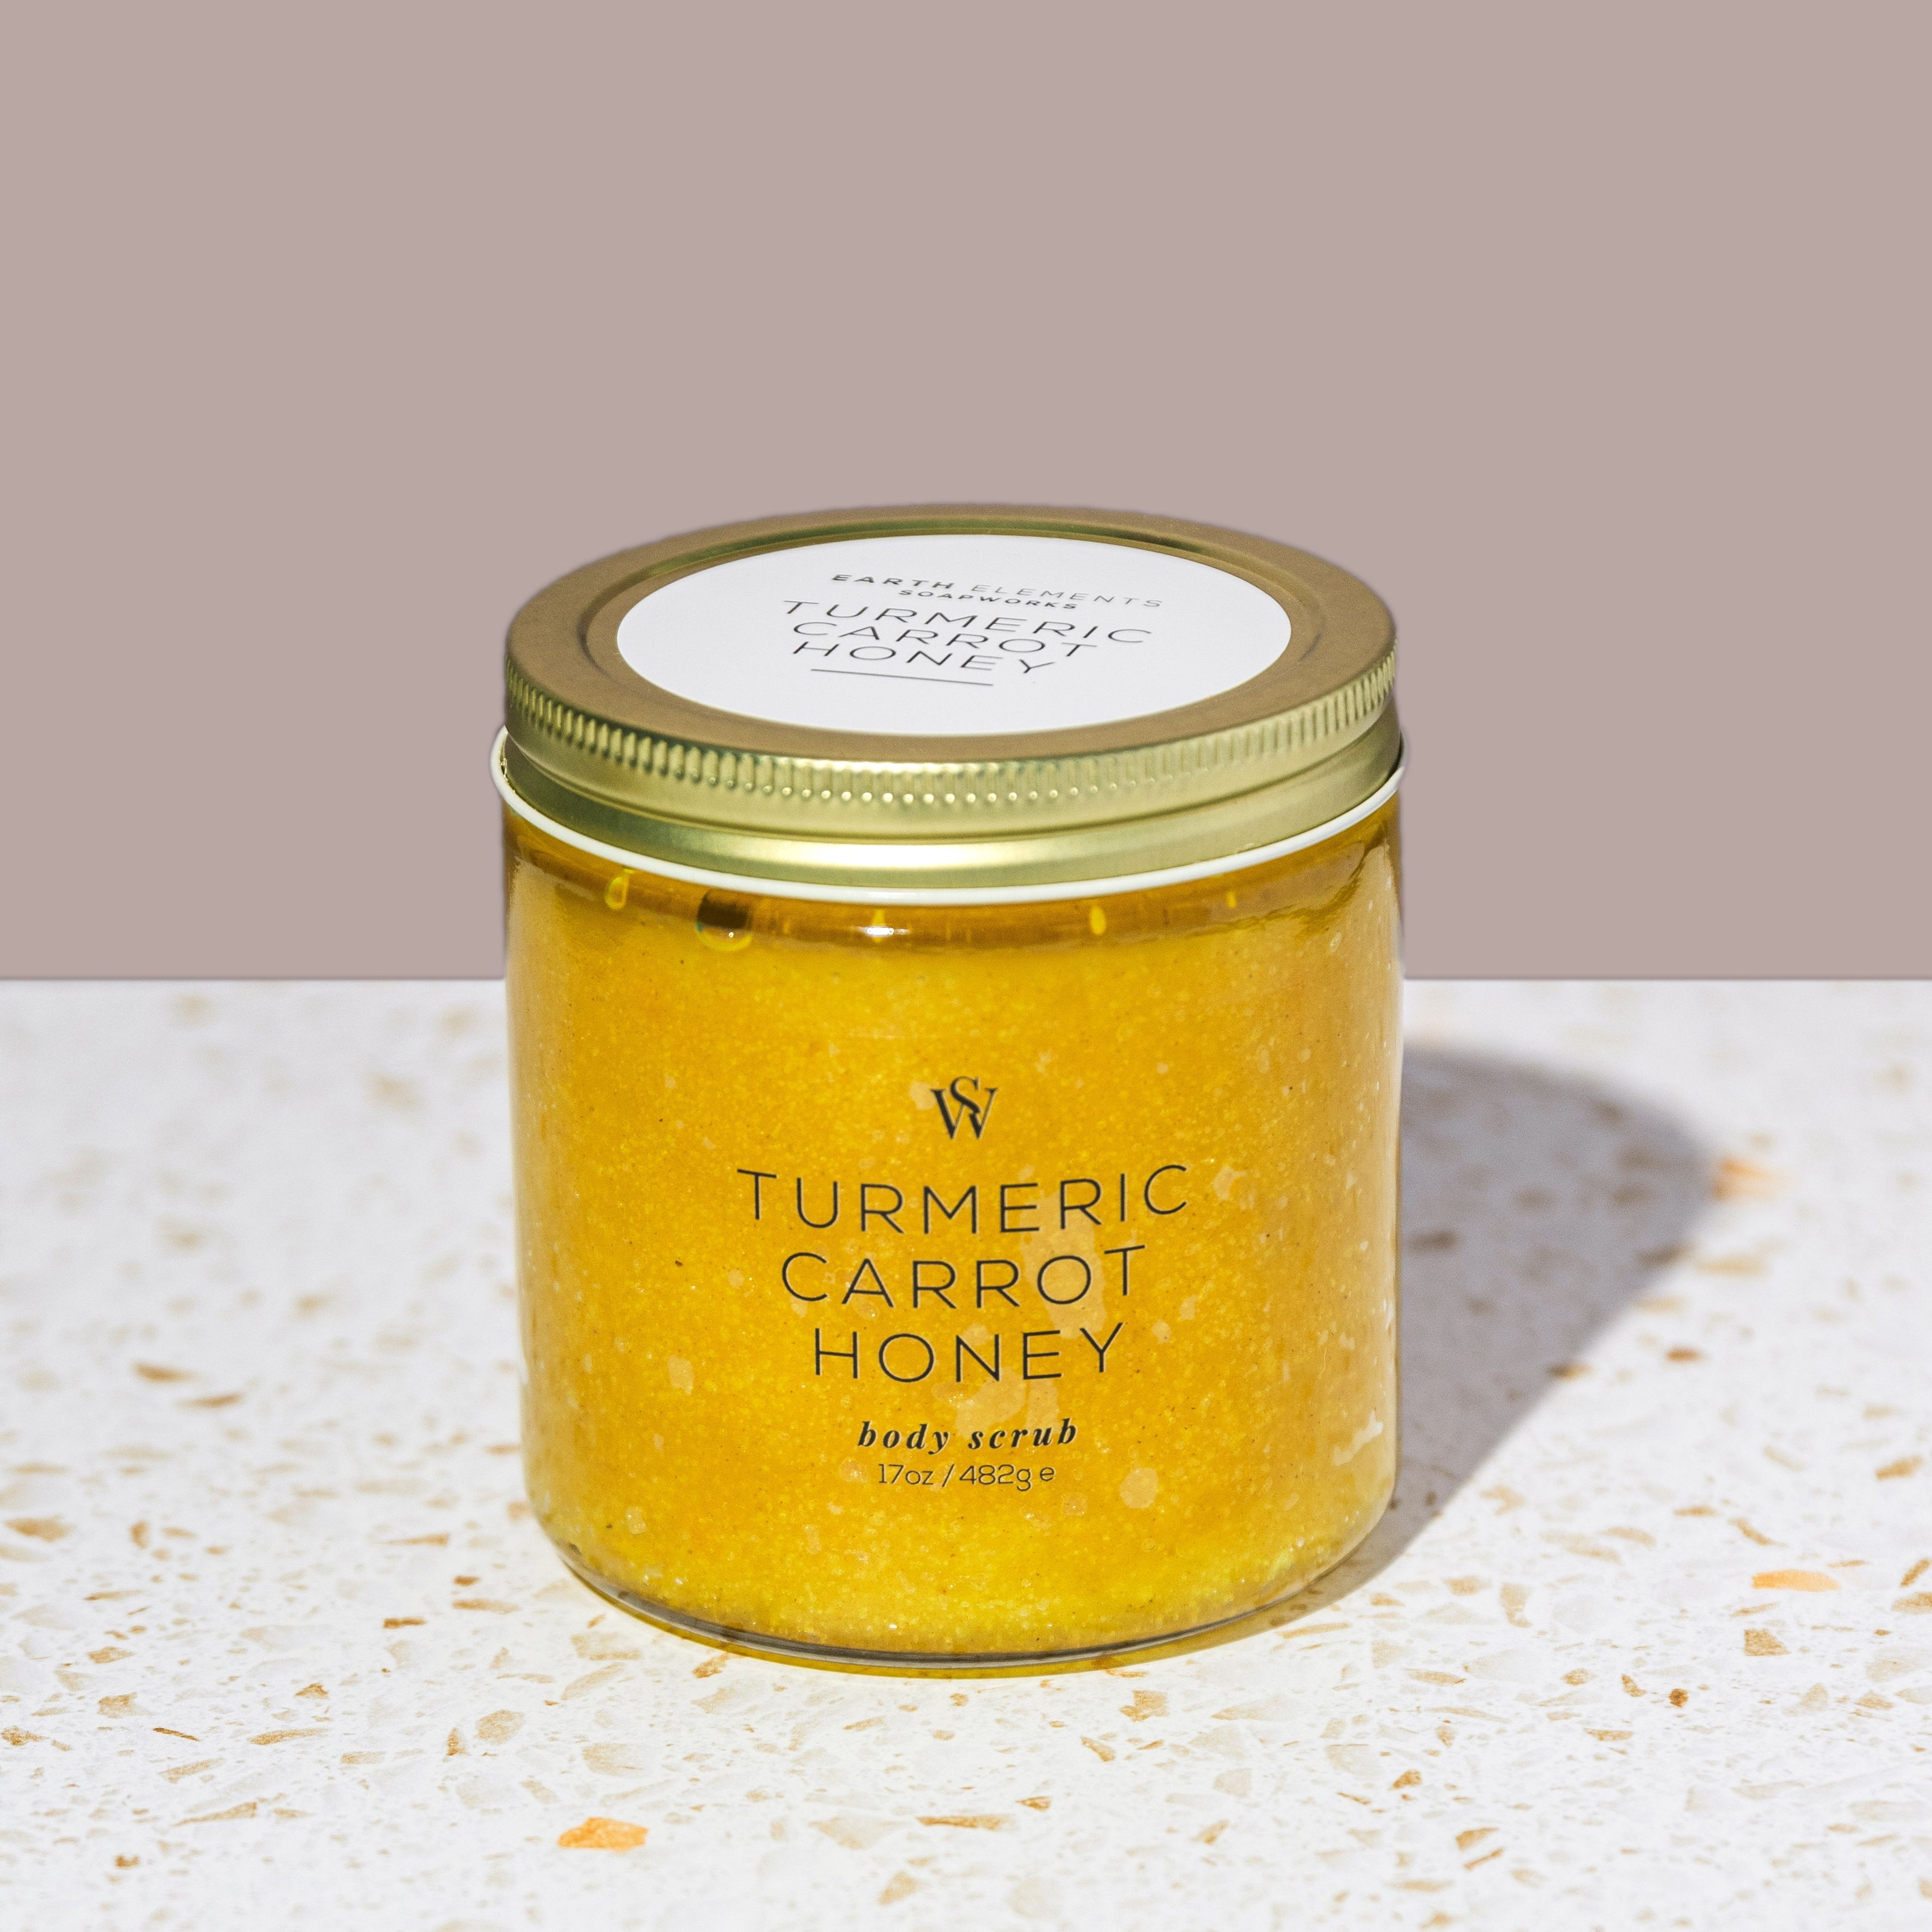 Turmeric Carrot Honey Body Scrub